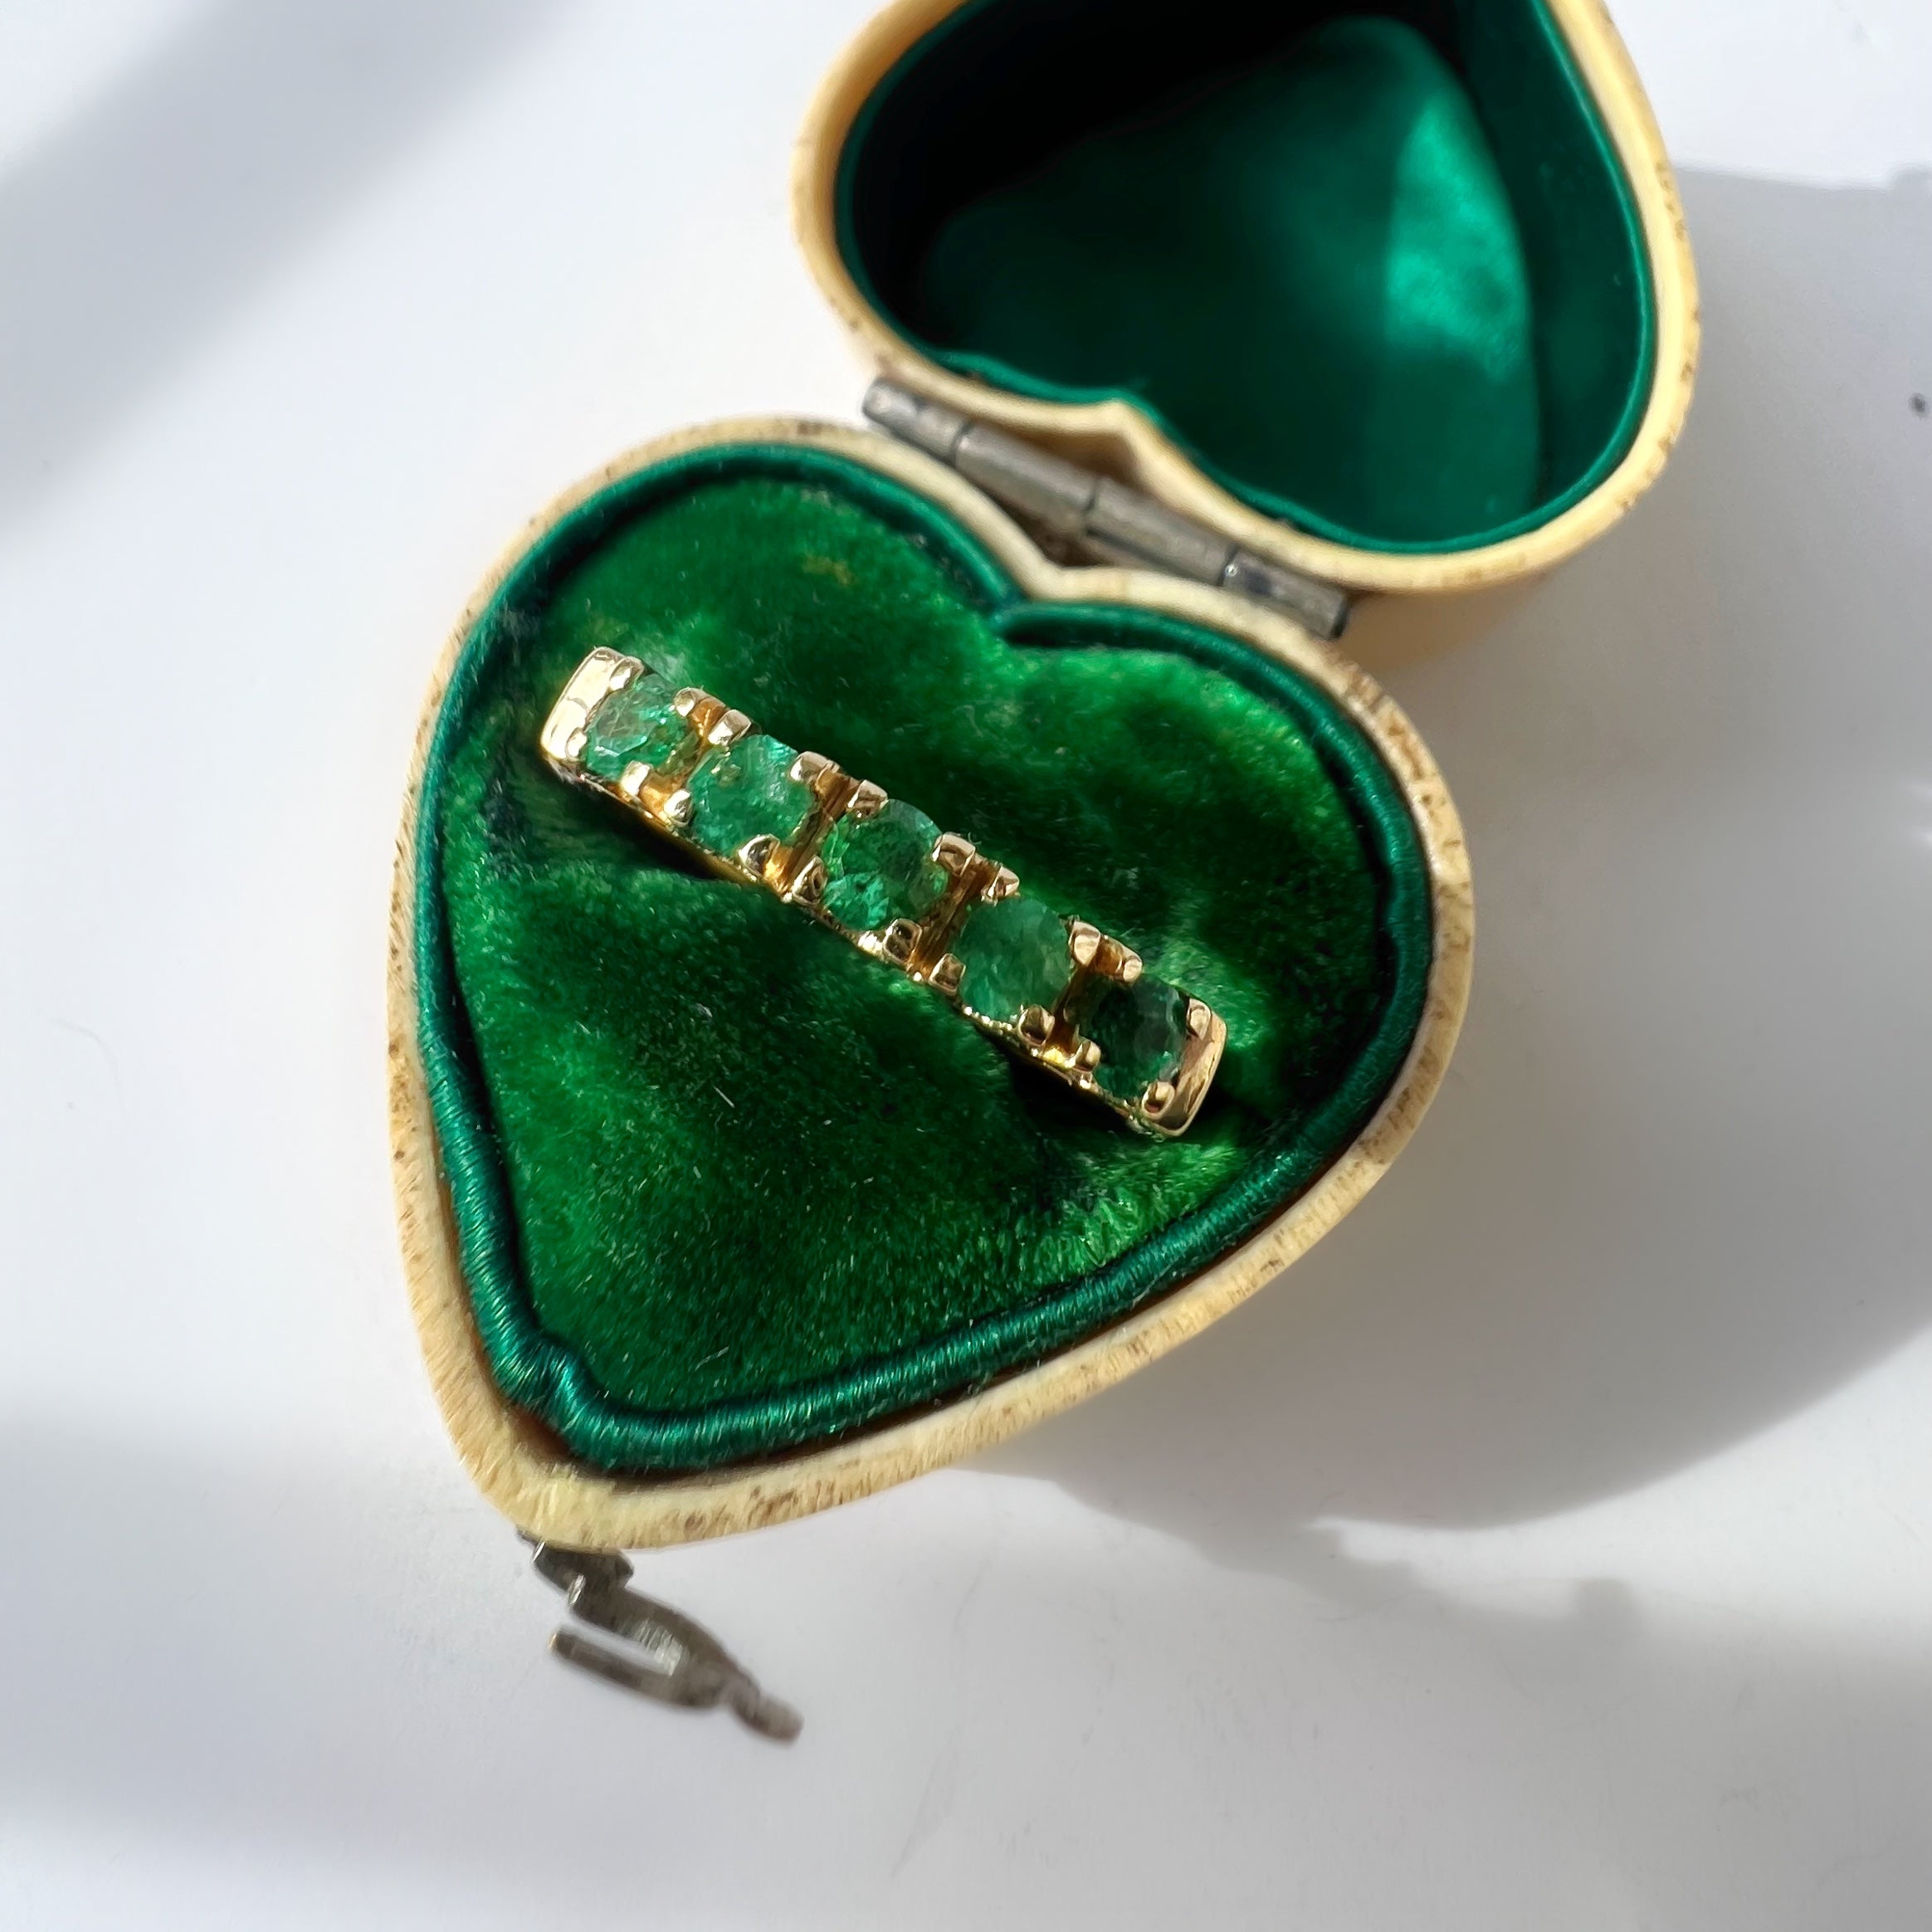 Vintage 5 Stone Emerald Line Ring